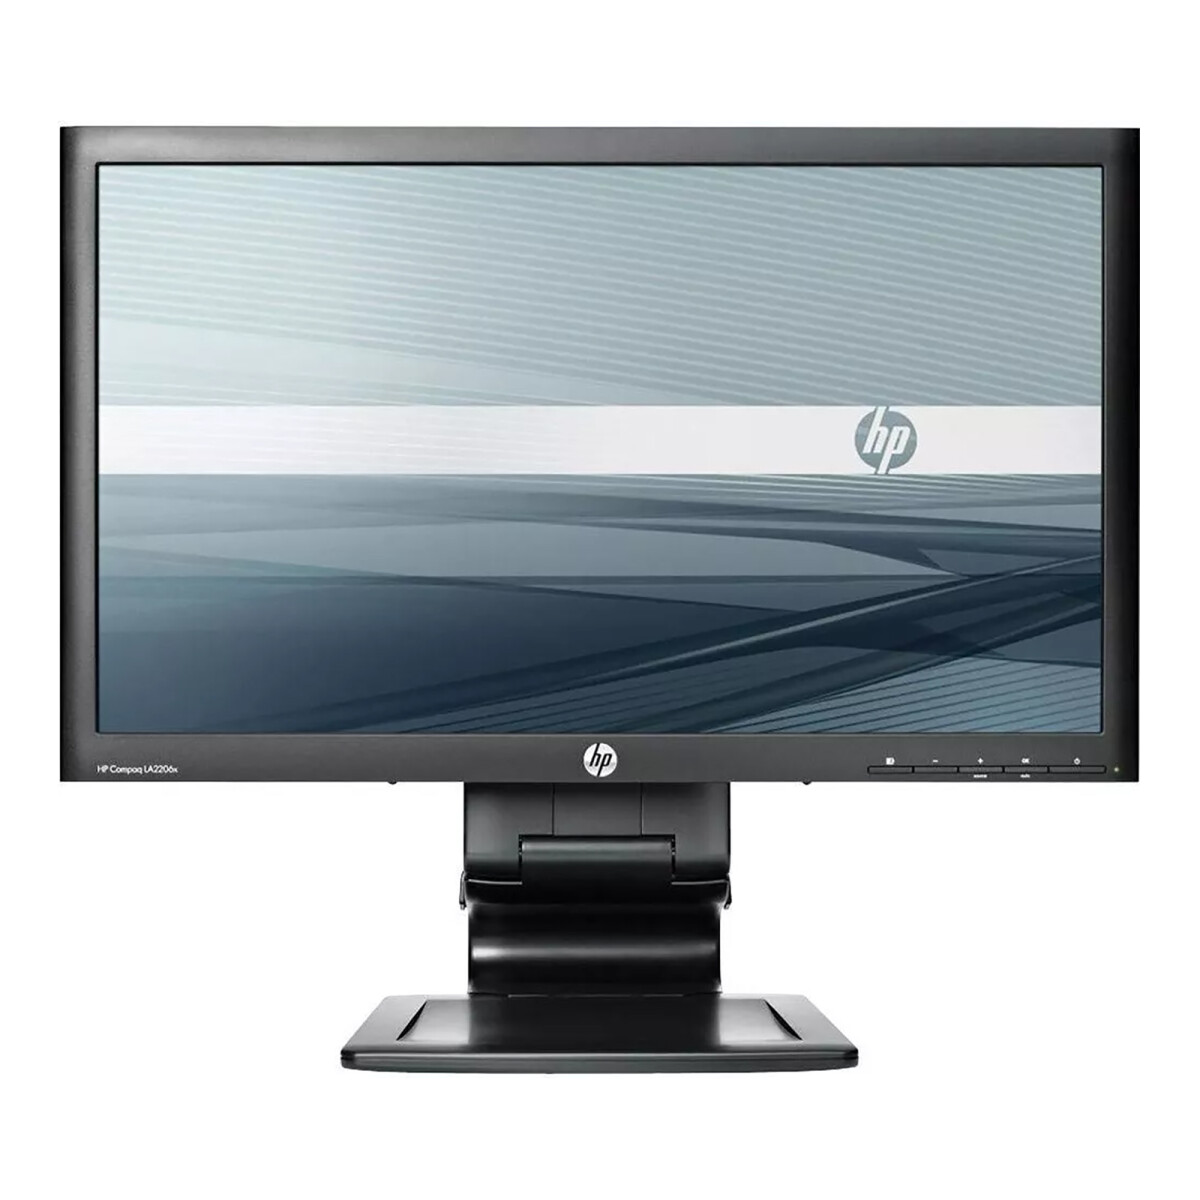 HP - Monitor Plano Fhd compaq LA2306X - 23'' Led Lcd. 1920X1080. 170º Horizontal / 160º Vertical. Re - 001 